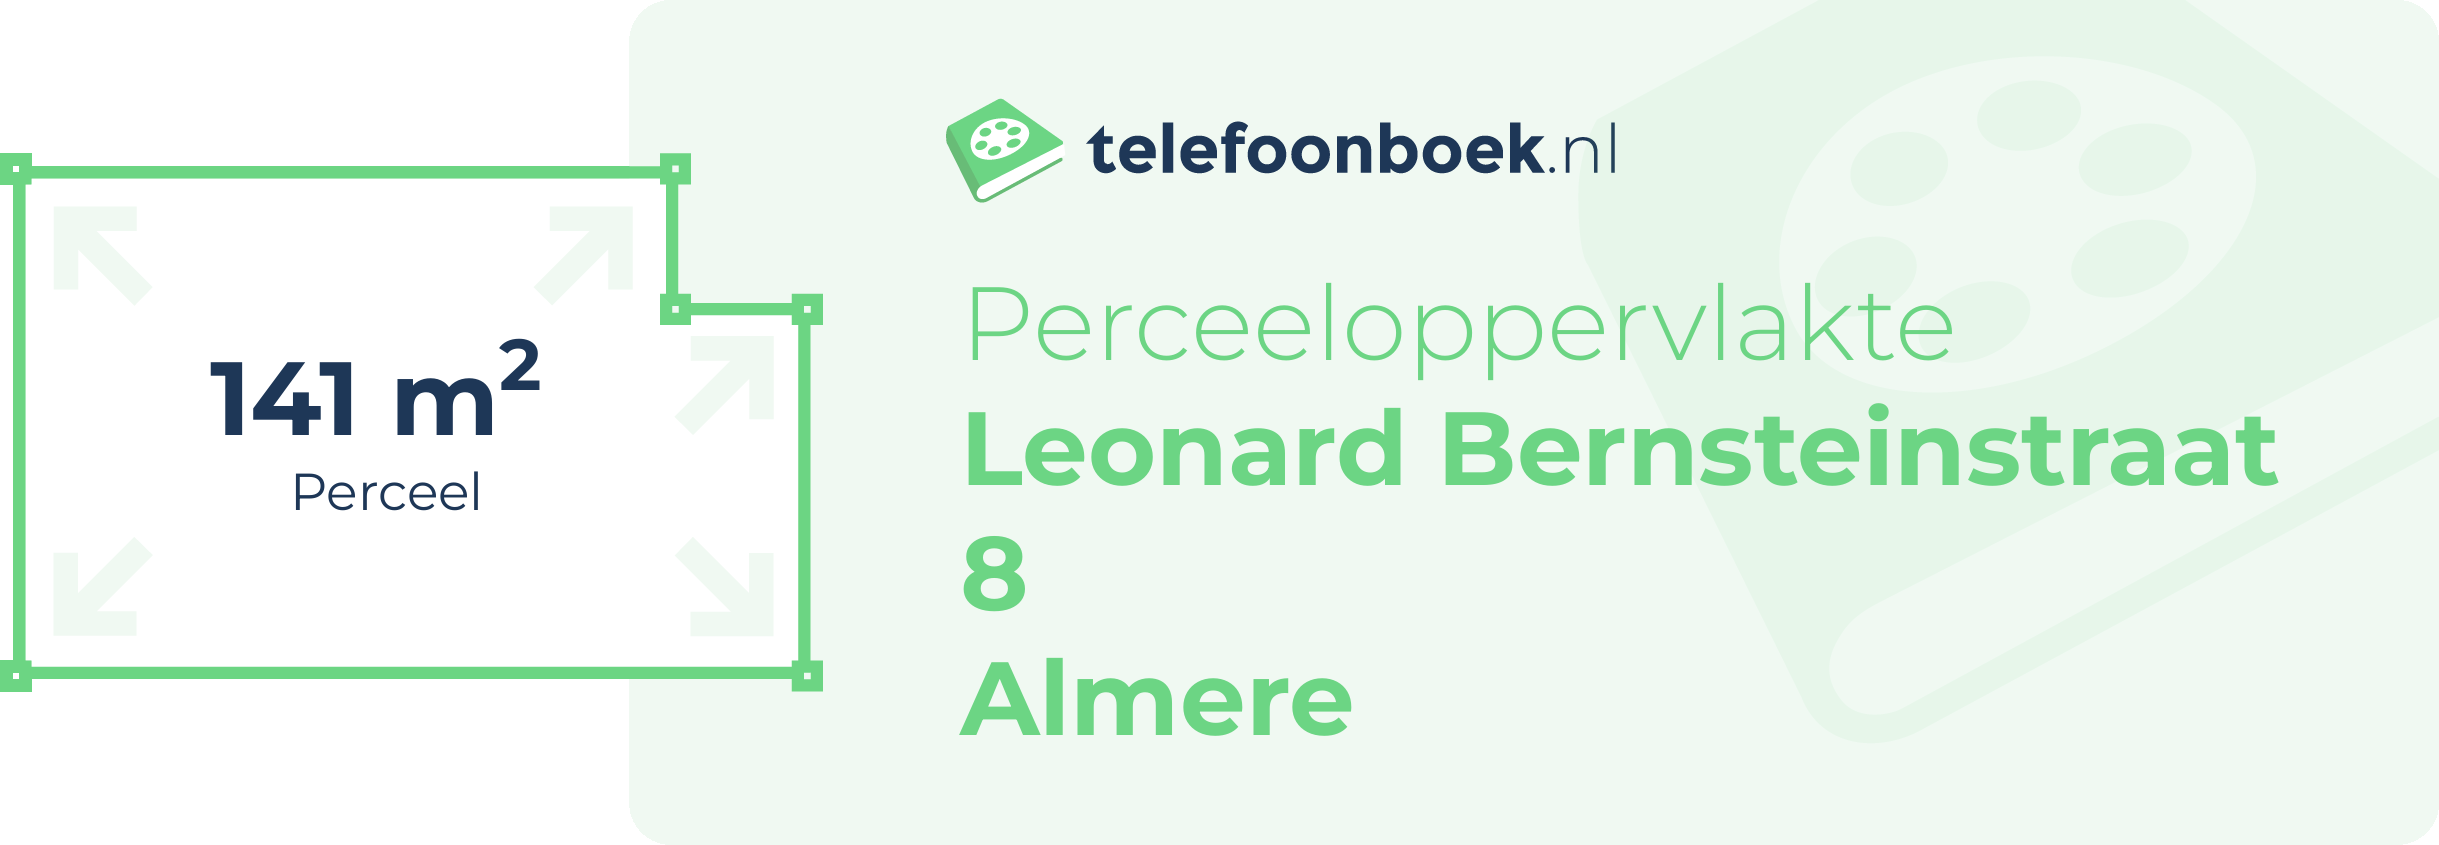 Perceeloppervlakte Leonard Bernsteinstraat 8 Almere